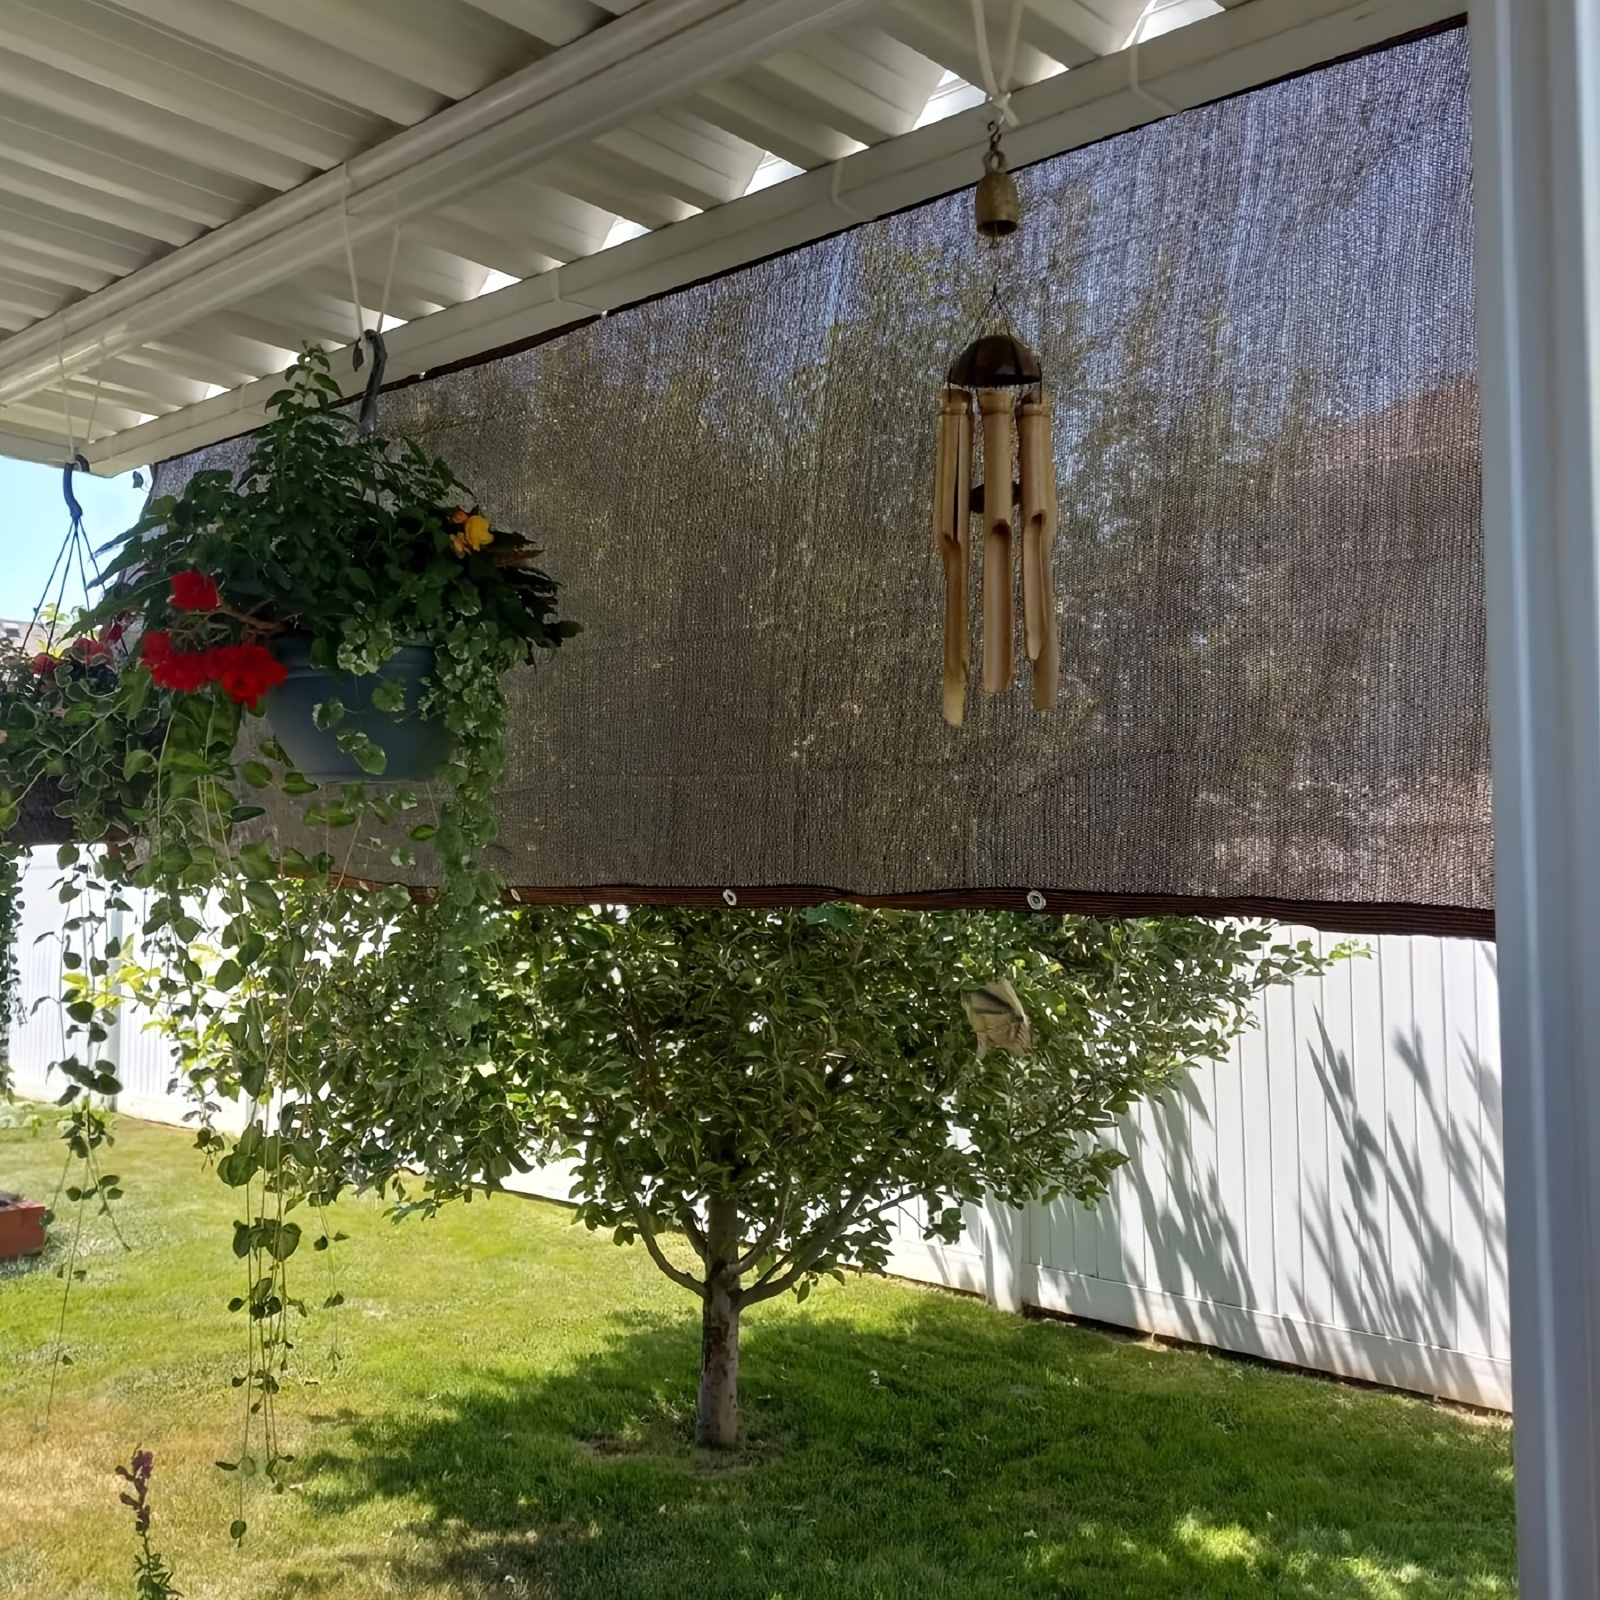 

1pc 80% Shade For Backyard Sun Shade Cloth Pergola Shade Cover For Garden Balcony Shade Canopy Deck Shade For Outdoor Patio Pergola Yard Backyard